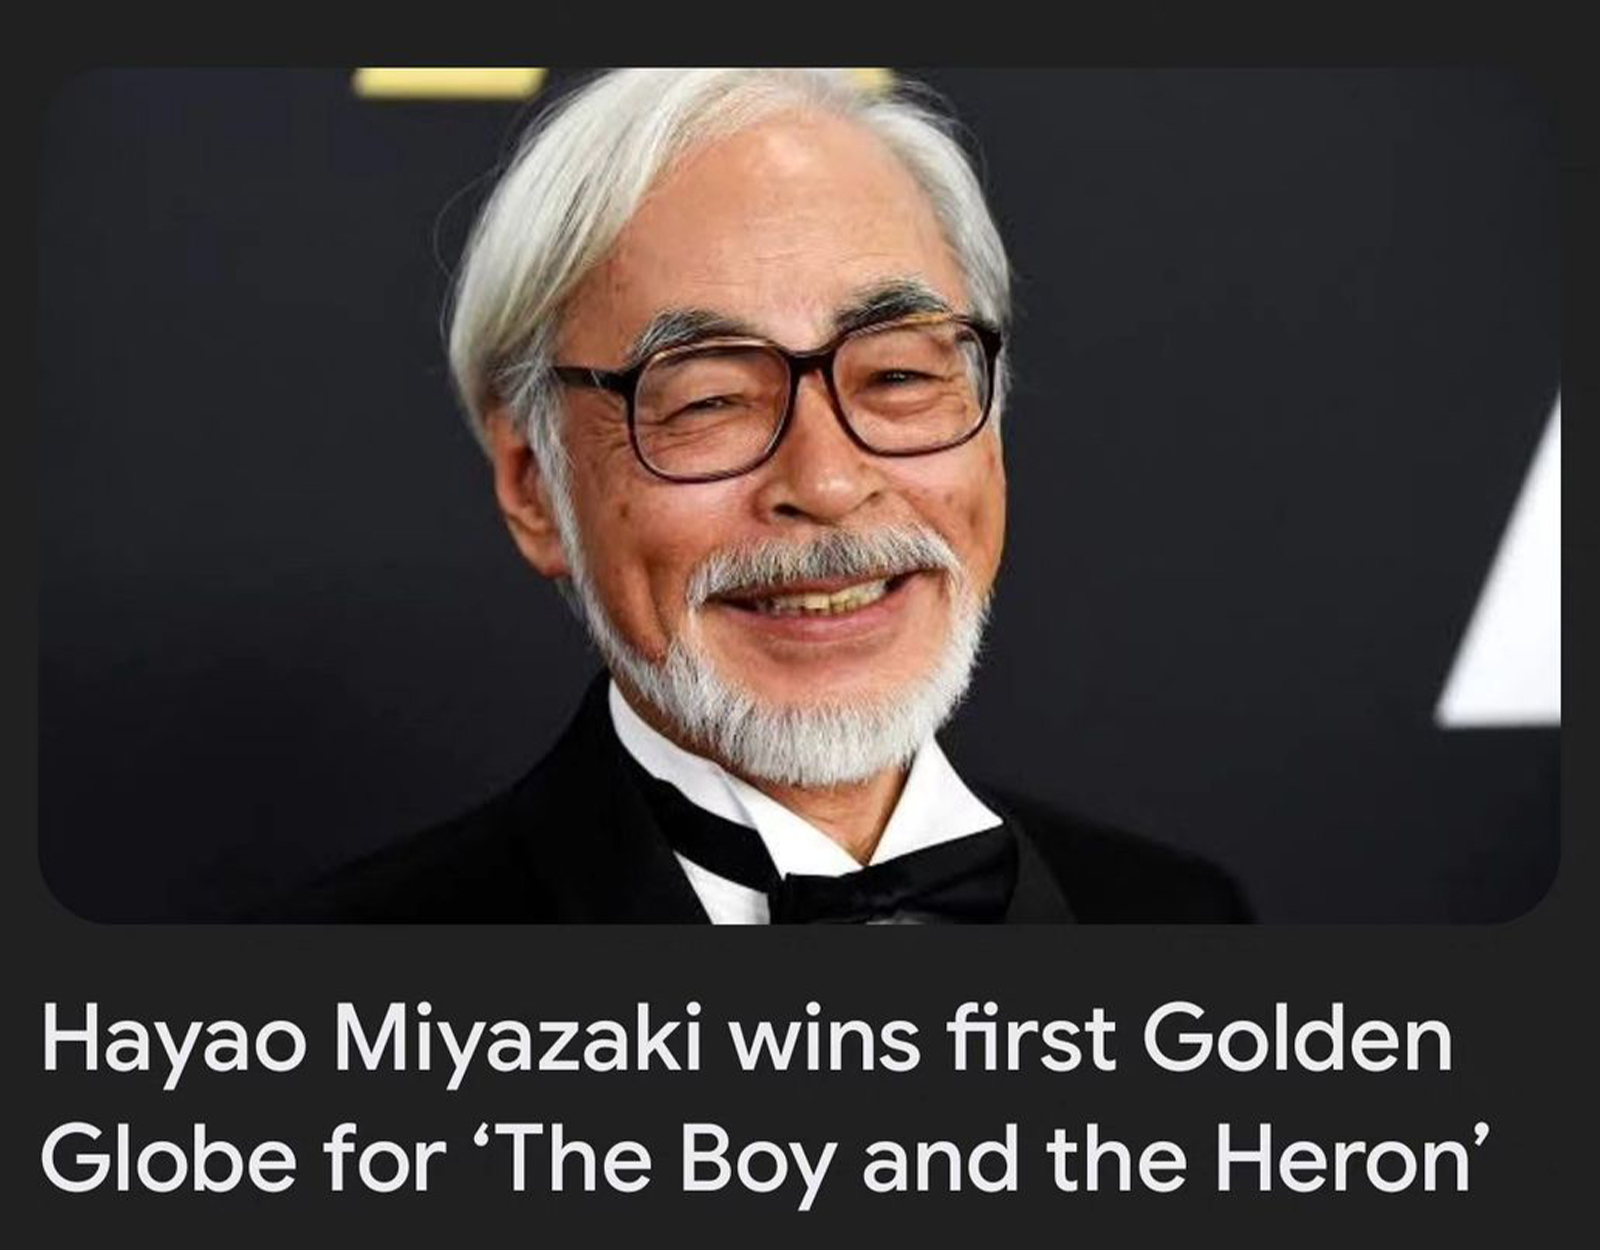 Hayao Miyazaki, Studio Ghibli's beloved producer, finally wins his first Golden Globe!